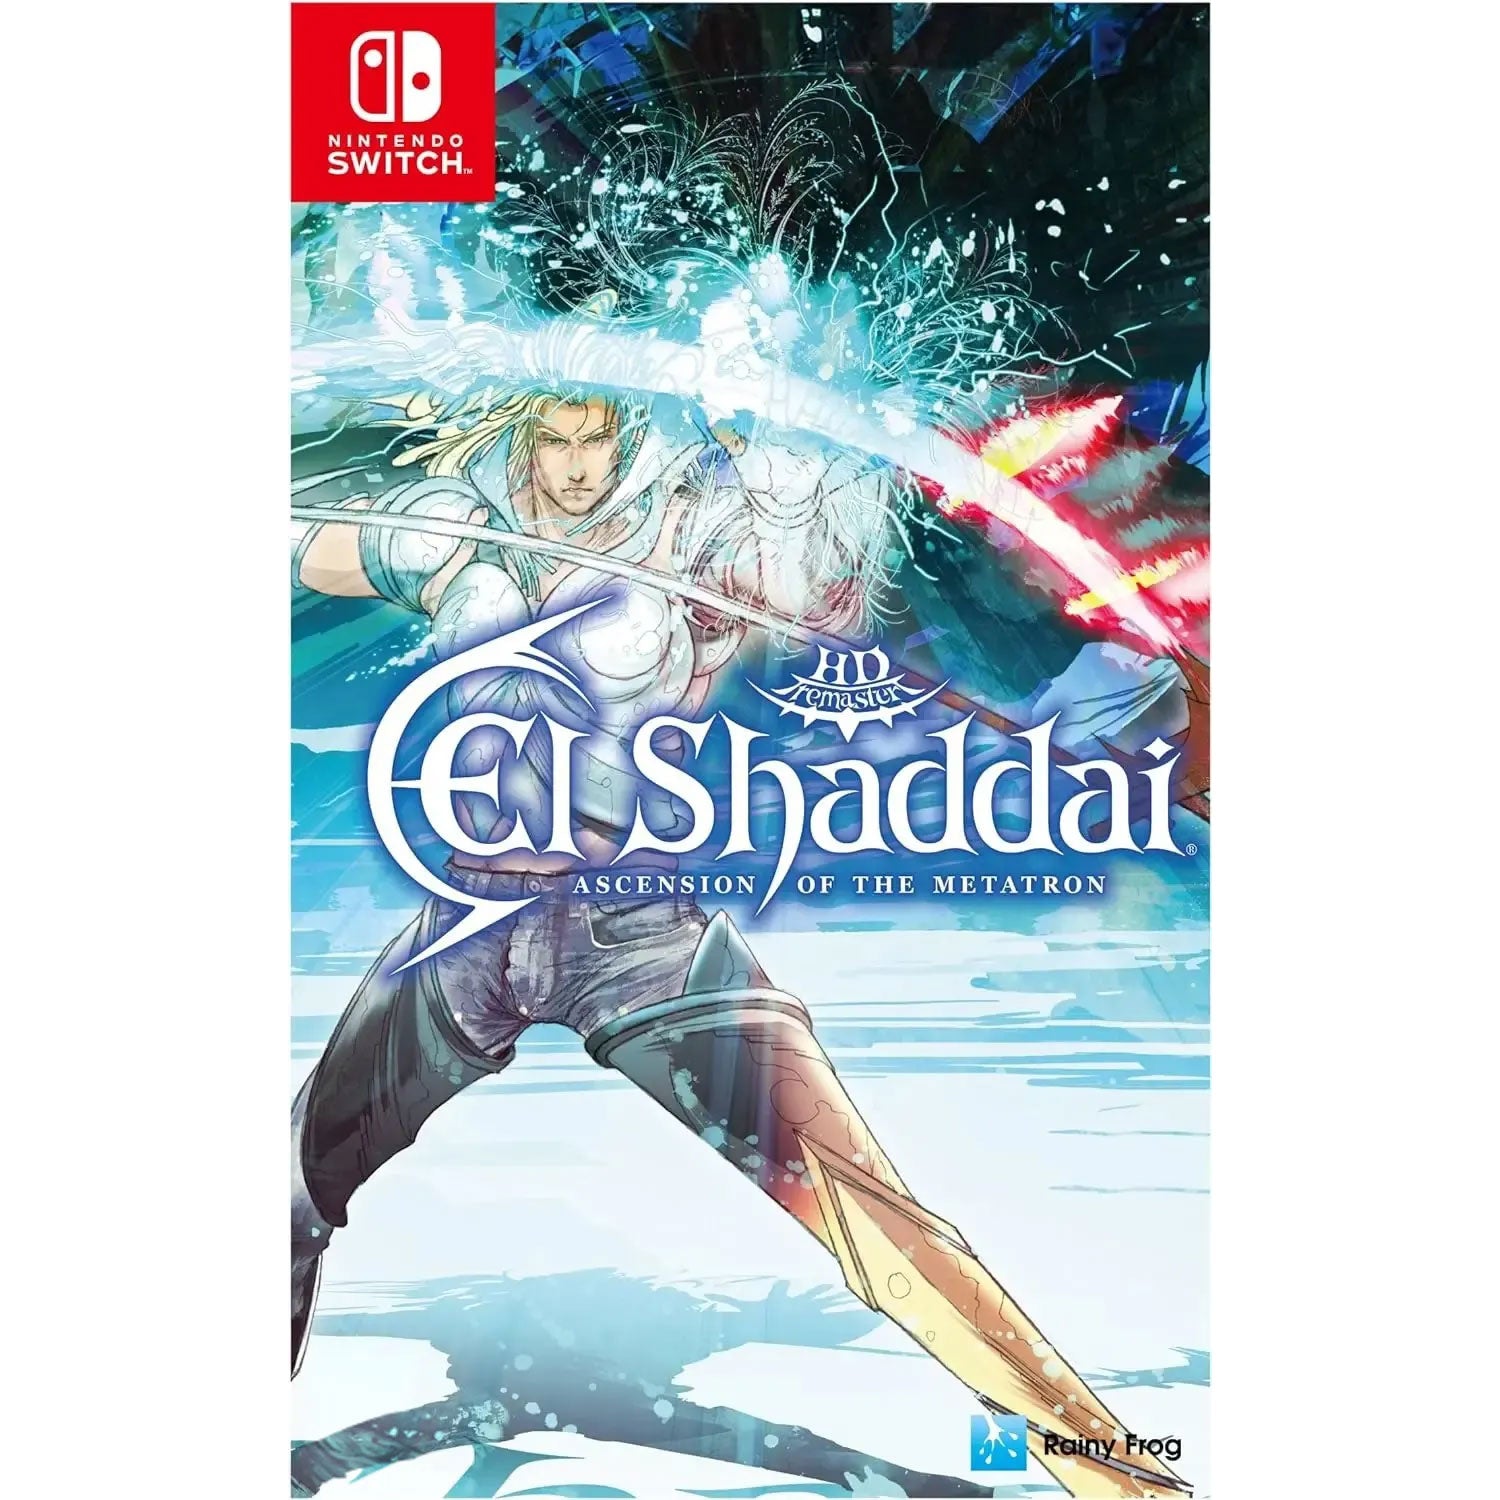 Nintendo Switch El Shaddai: Ascension of the Metatron HD Remaster